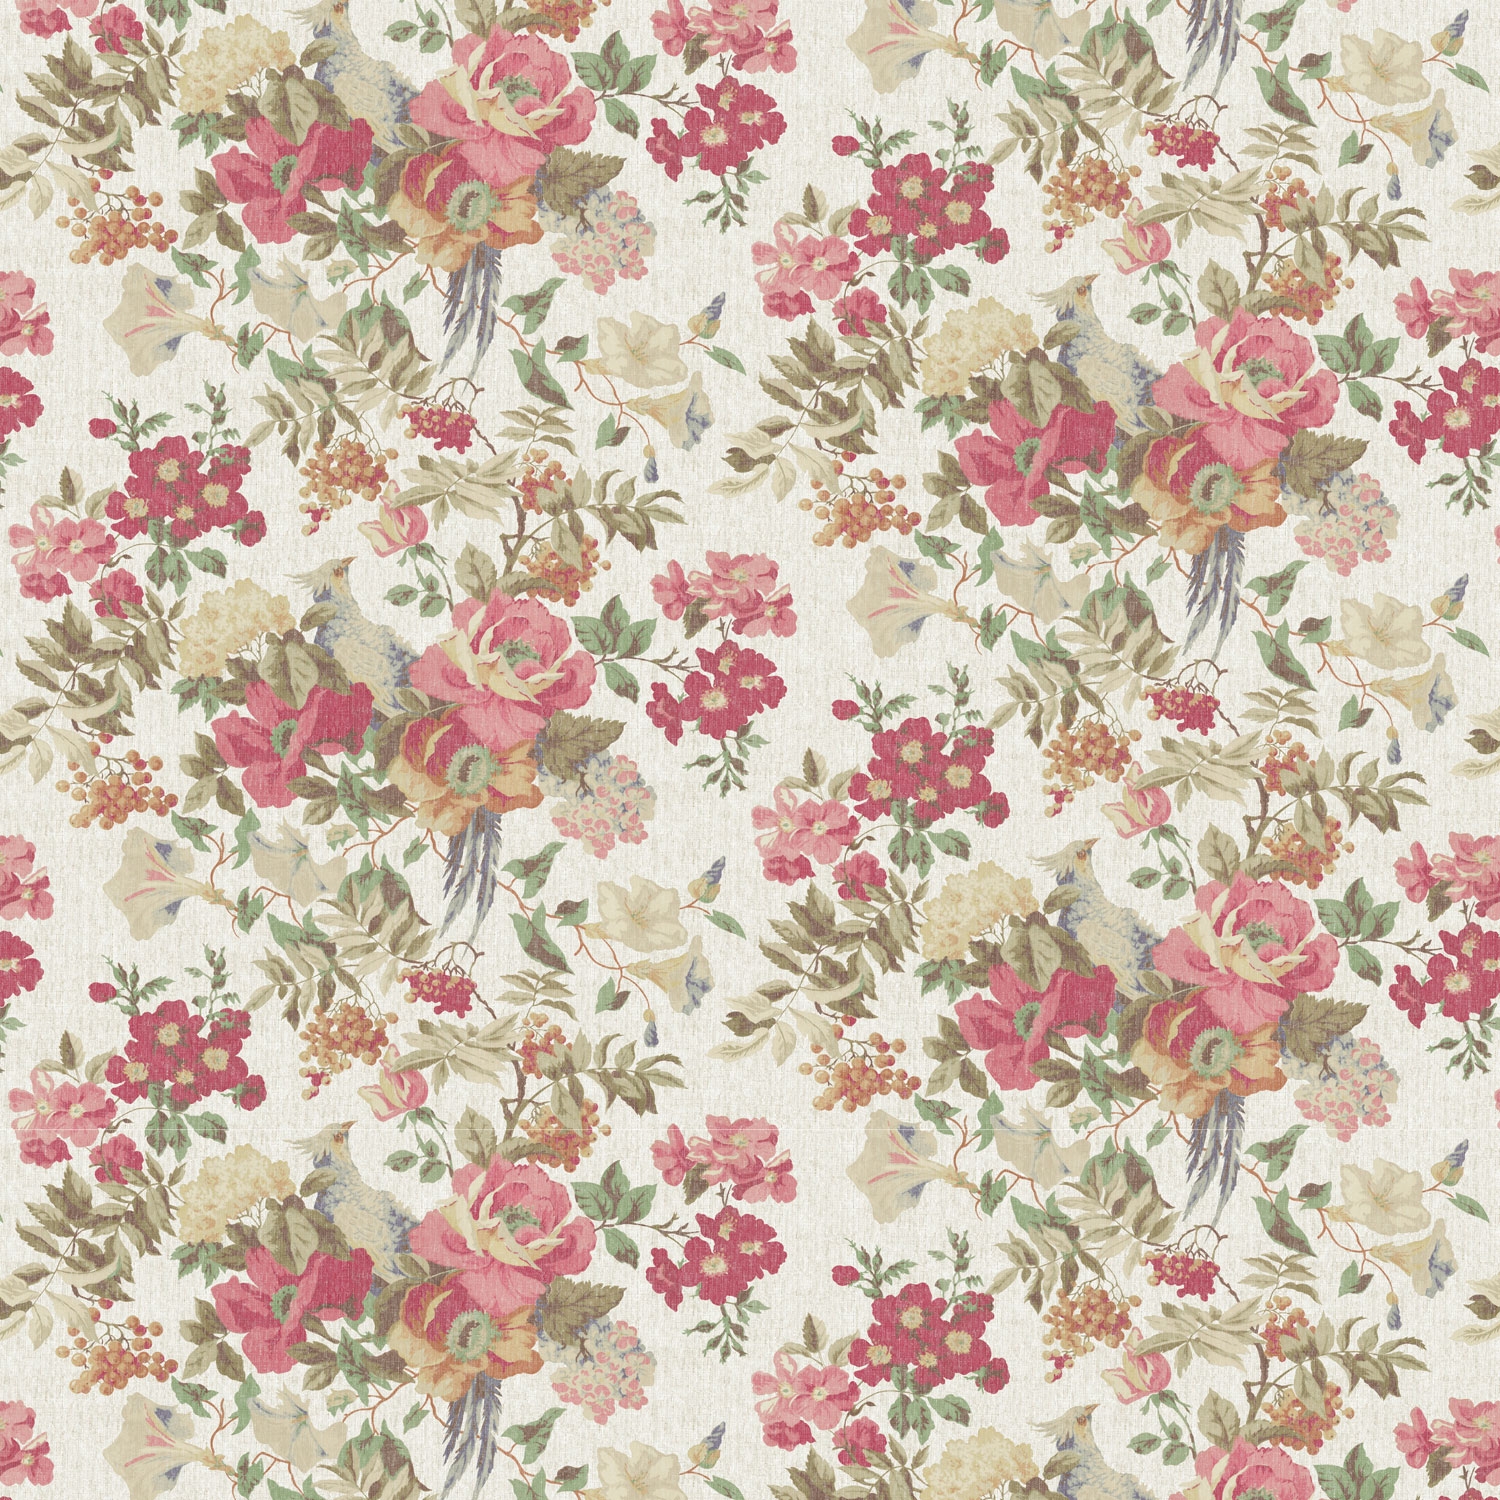 Flower Wallpaper Vintage   Share Online